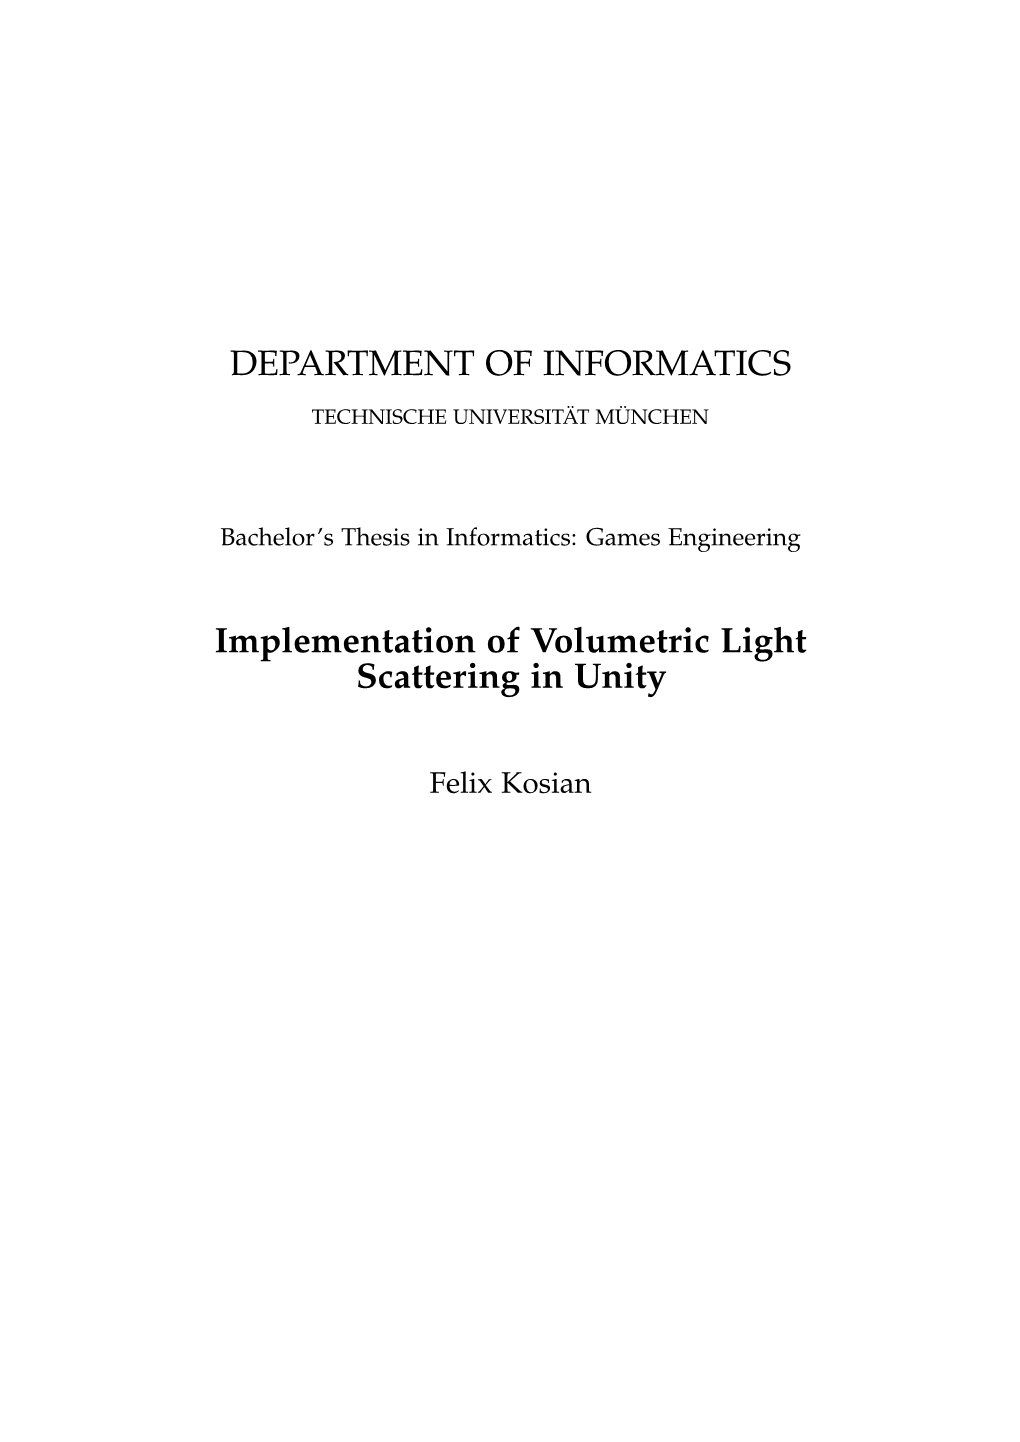 DEPARTMENT of INFORMATICS Implementation of Volumetric Light